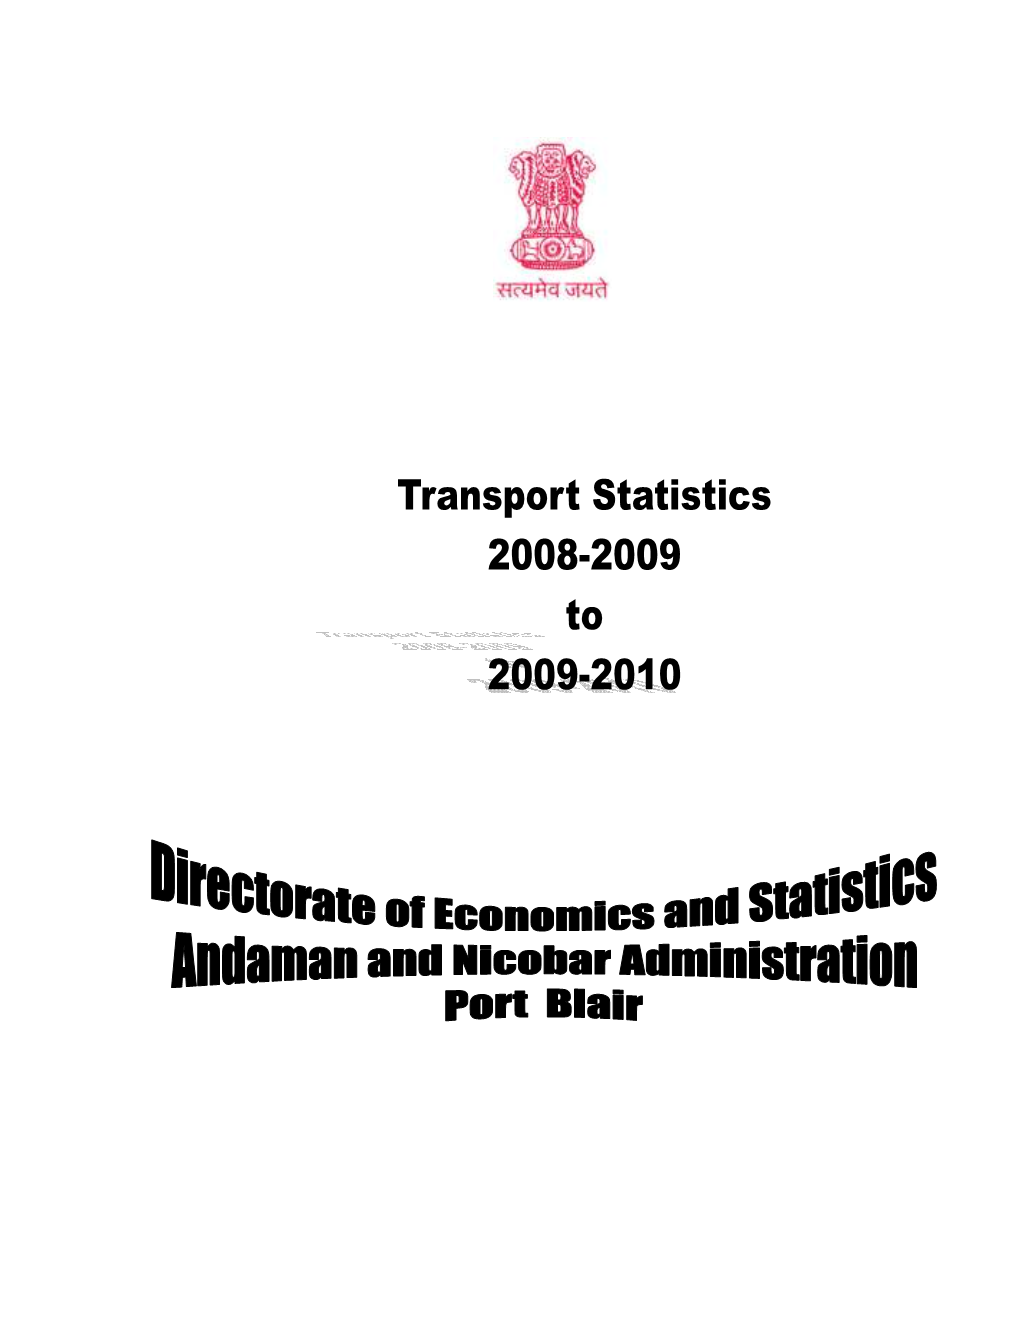 Transport Statistics 2008-09 to 2009-10